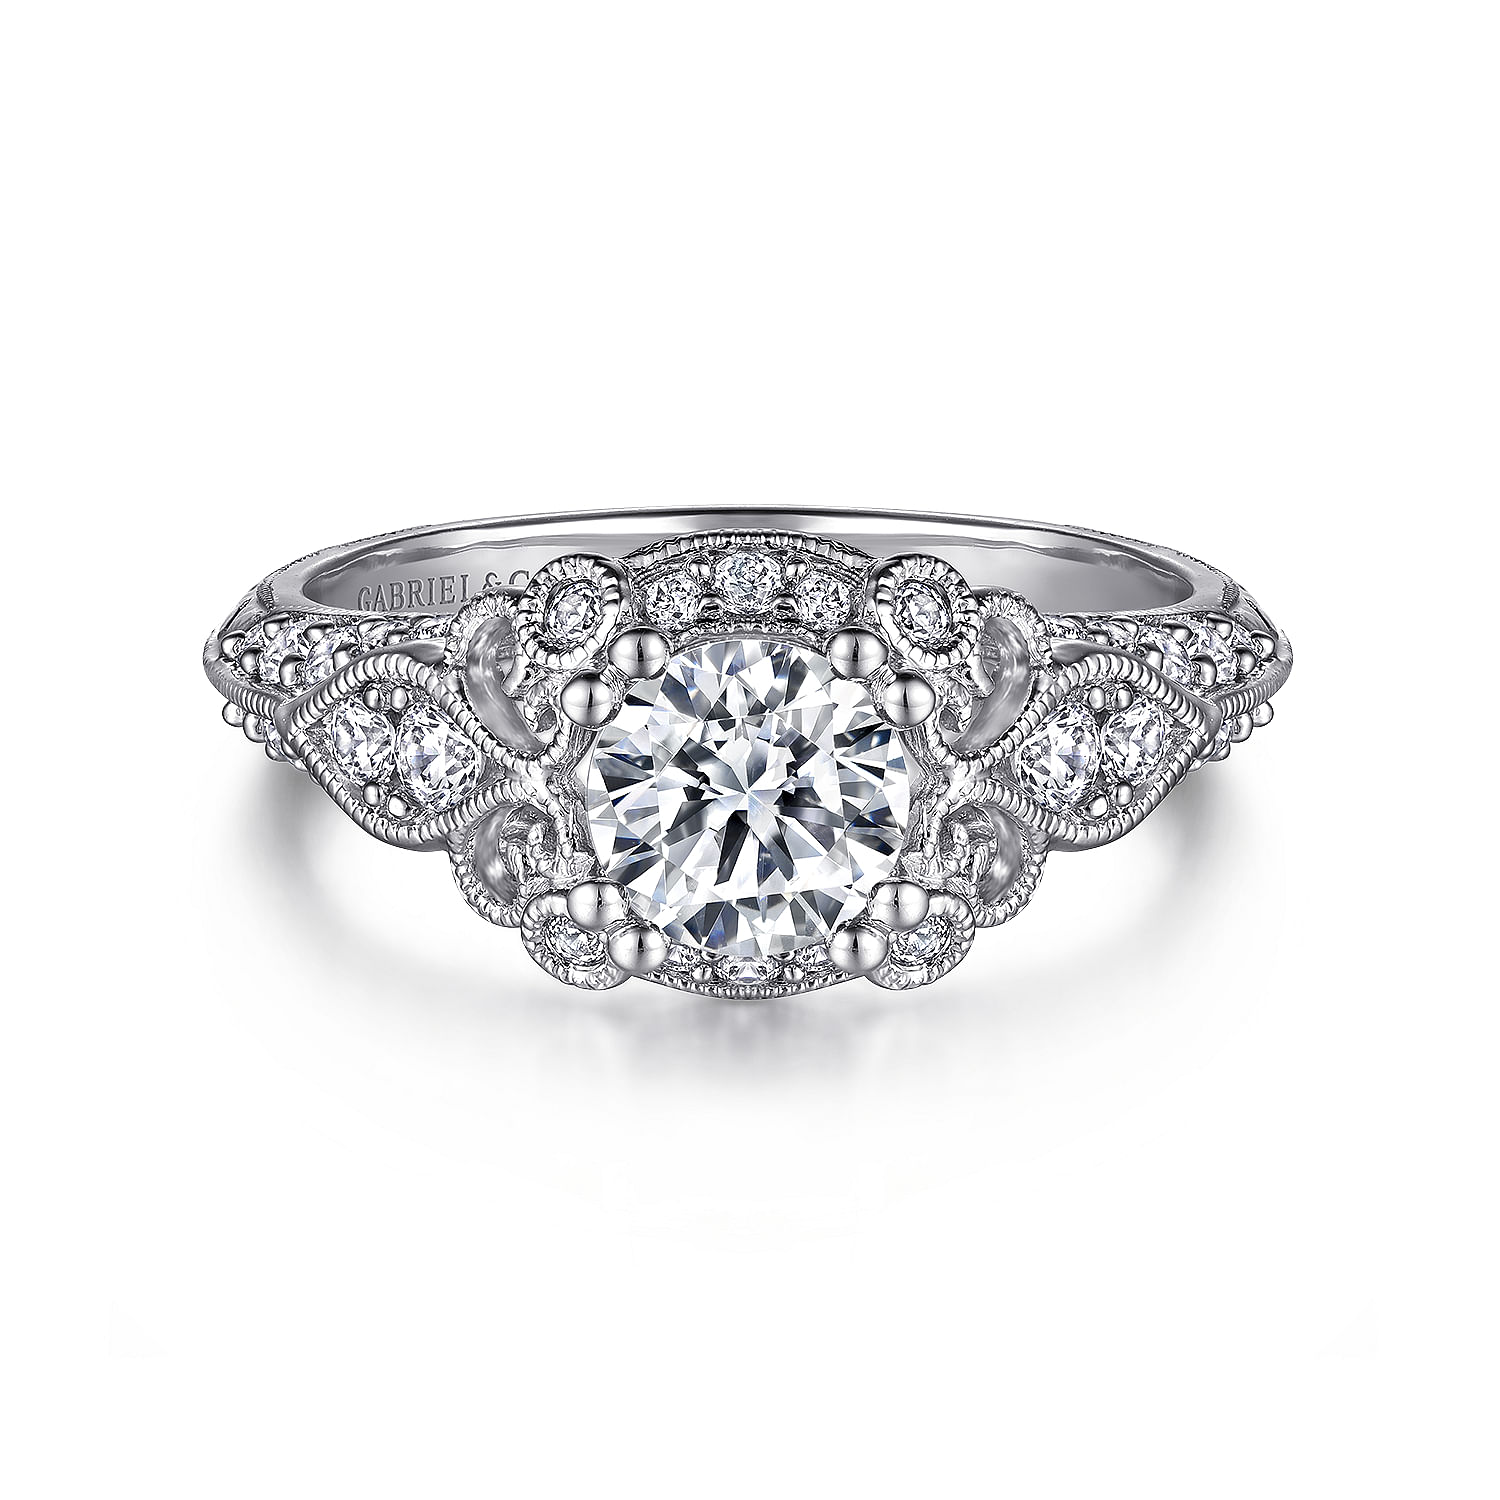 Gabriel - Unique 14K White Gold Vintage Inspired Diamond Halo Engagement Ring